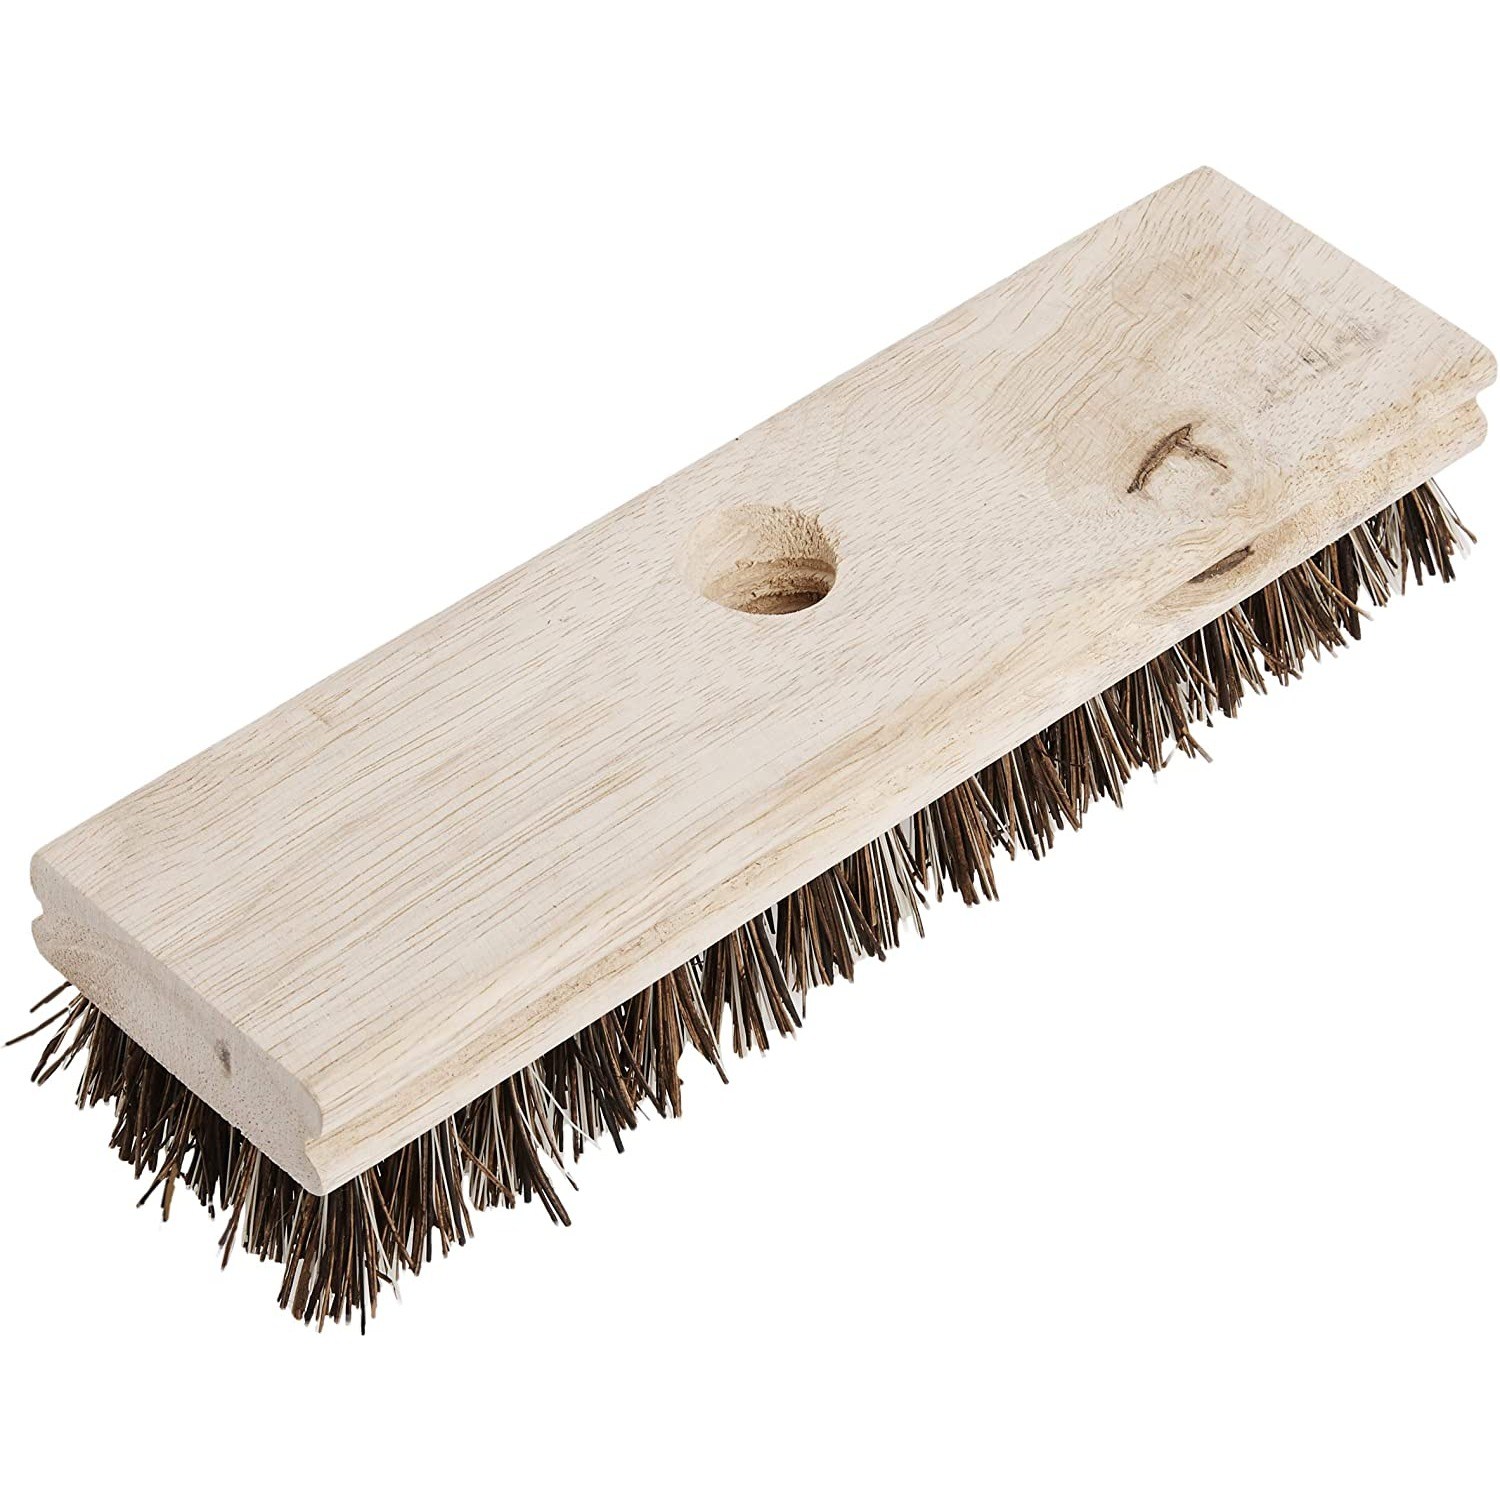 O Cedar® 10 Palmyra Deck Scrub Brush